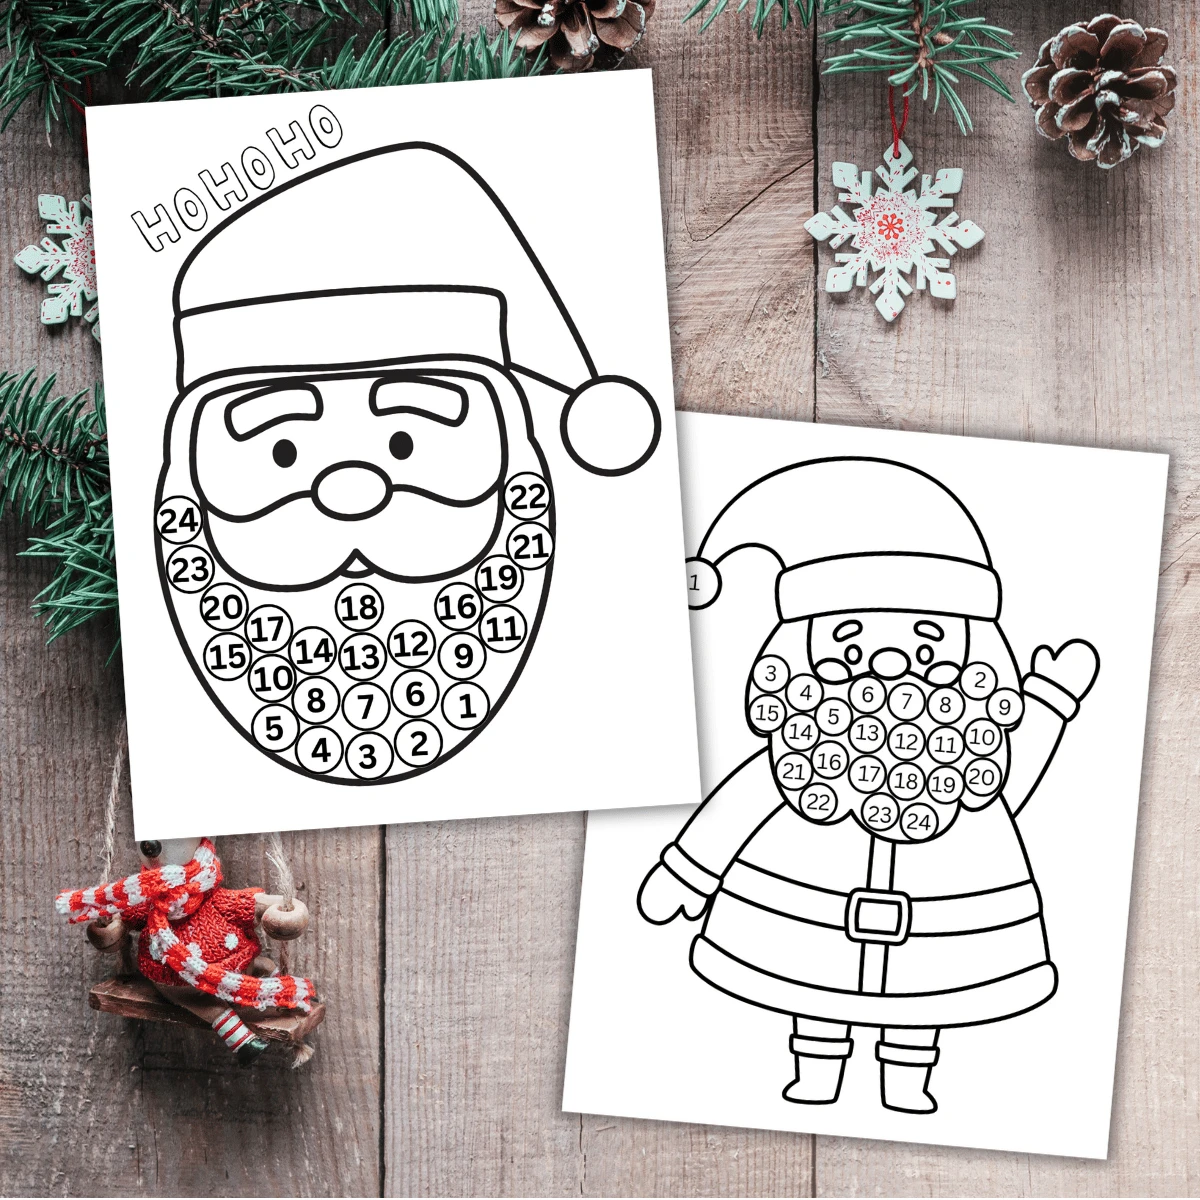 Printable Santa craft to color and countdown to Christmas by adding cotton balls to Santa's beard